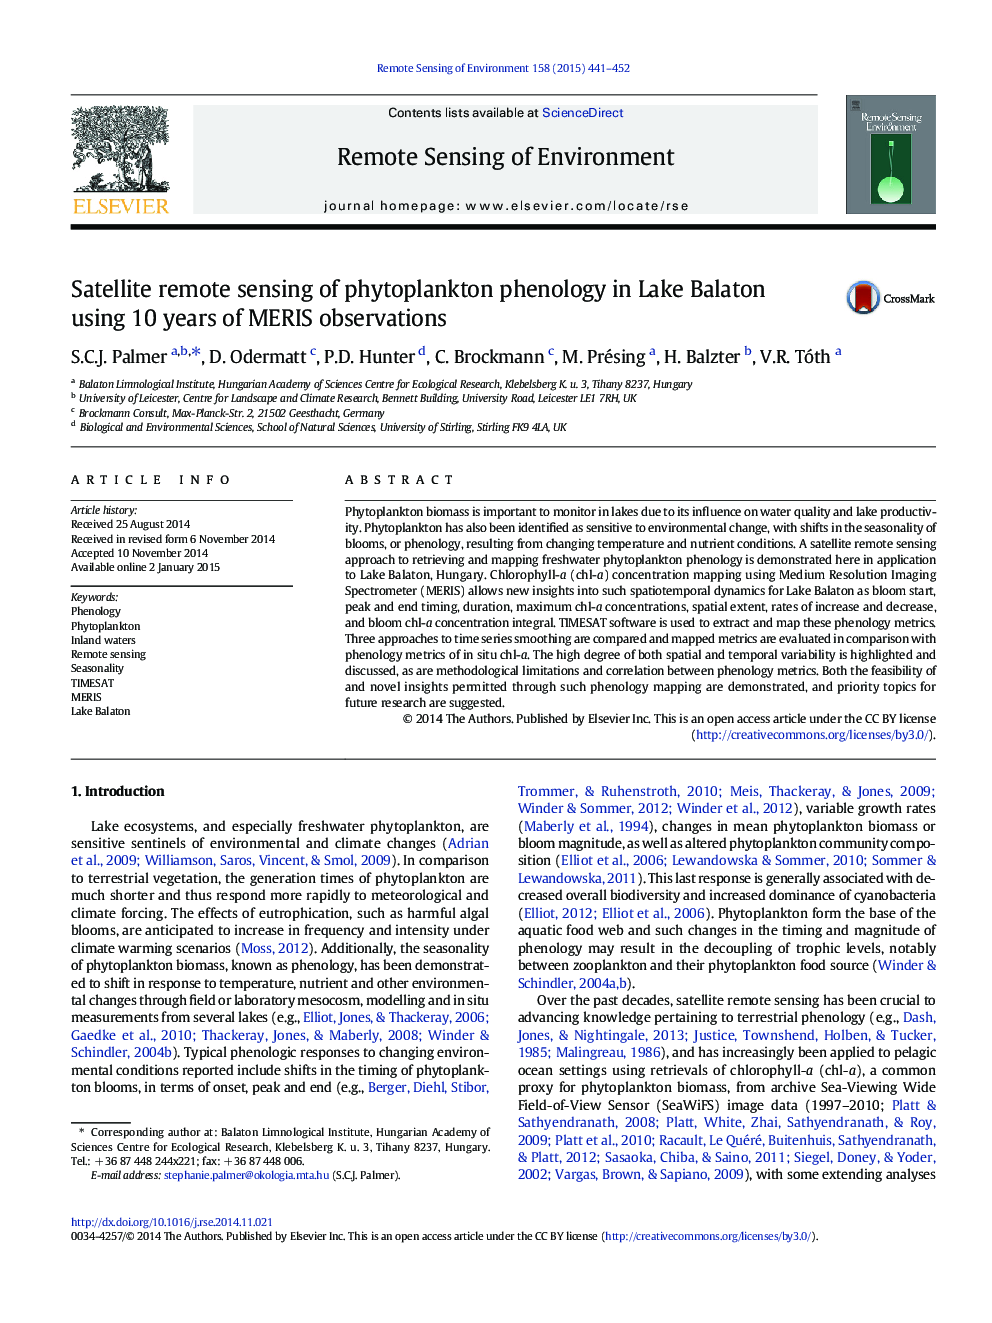 Satellite remote sensing of phytoplankton phenology in Lake Balaton using 10Â years of MERIS observations